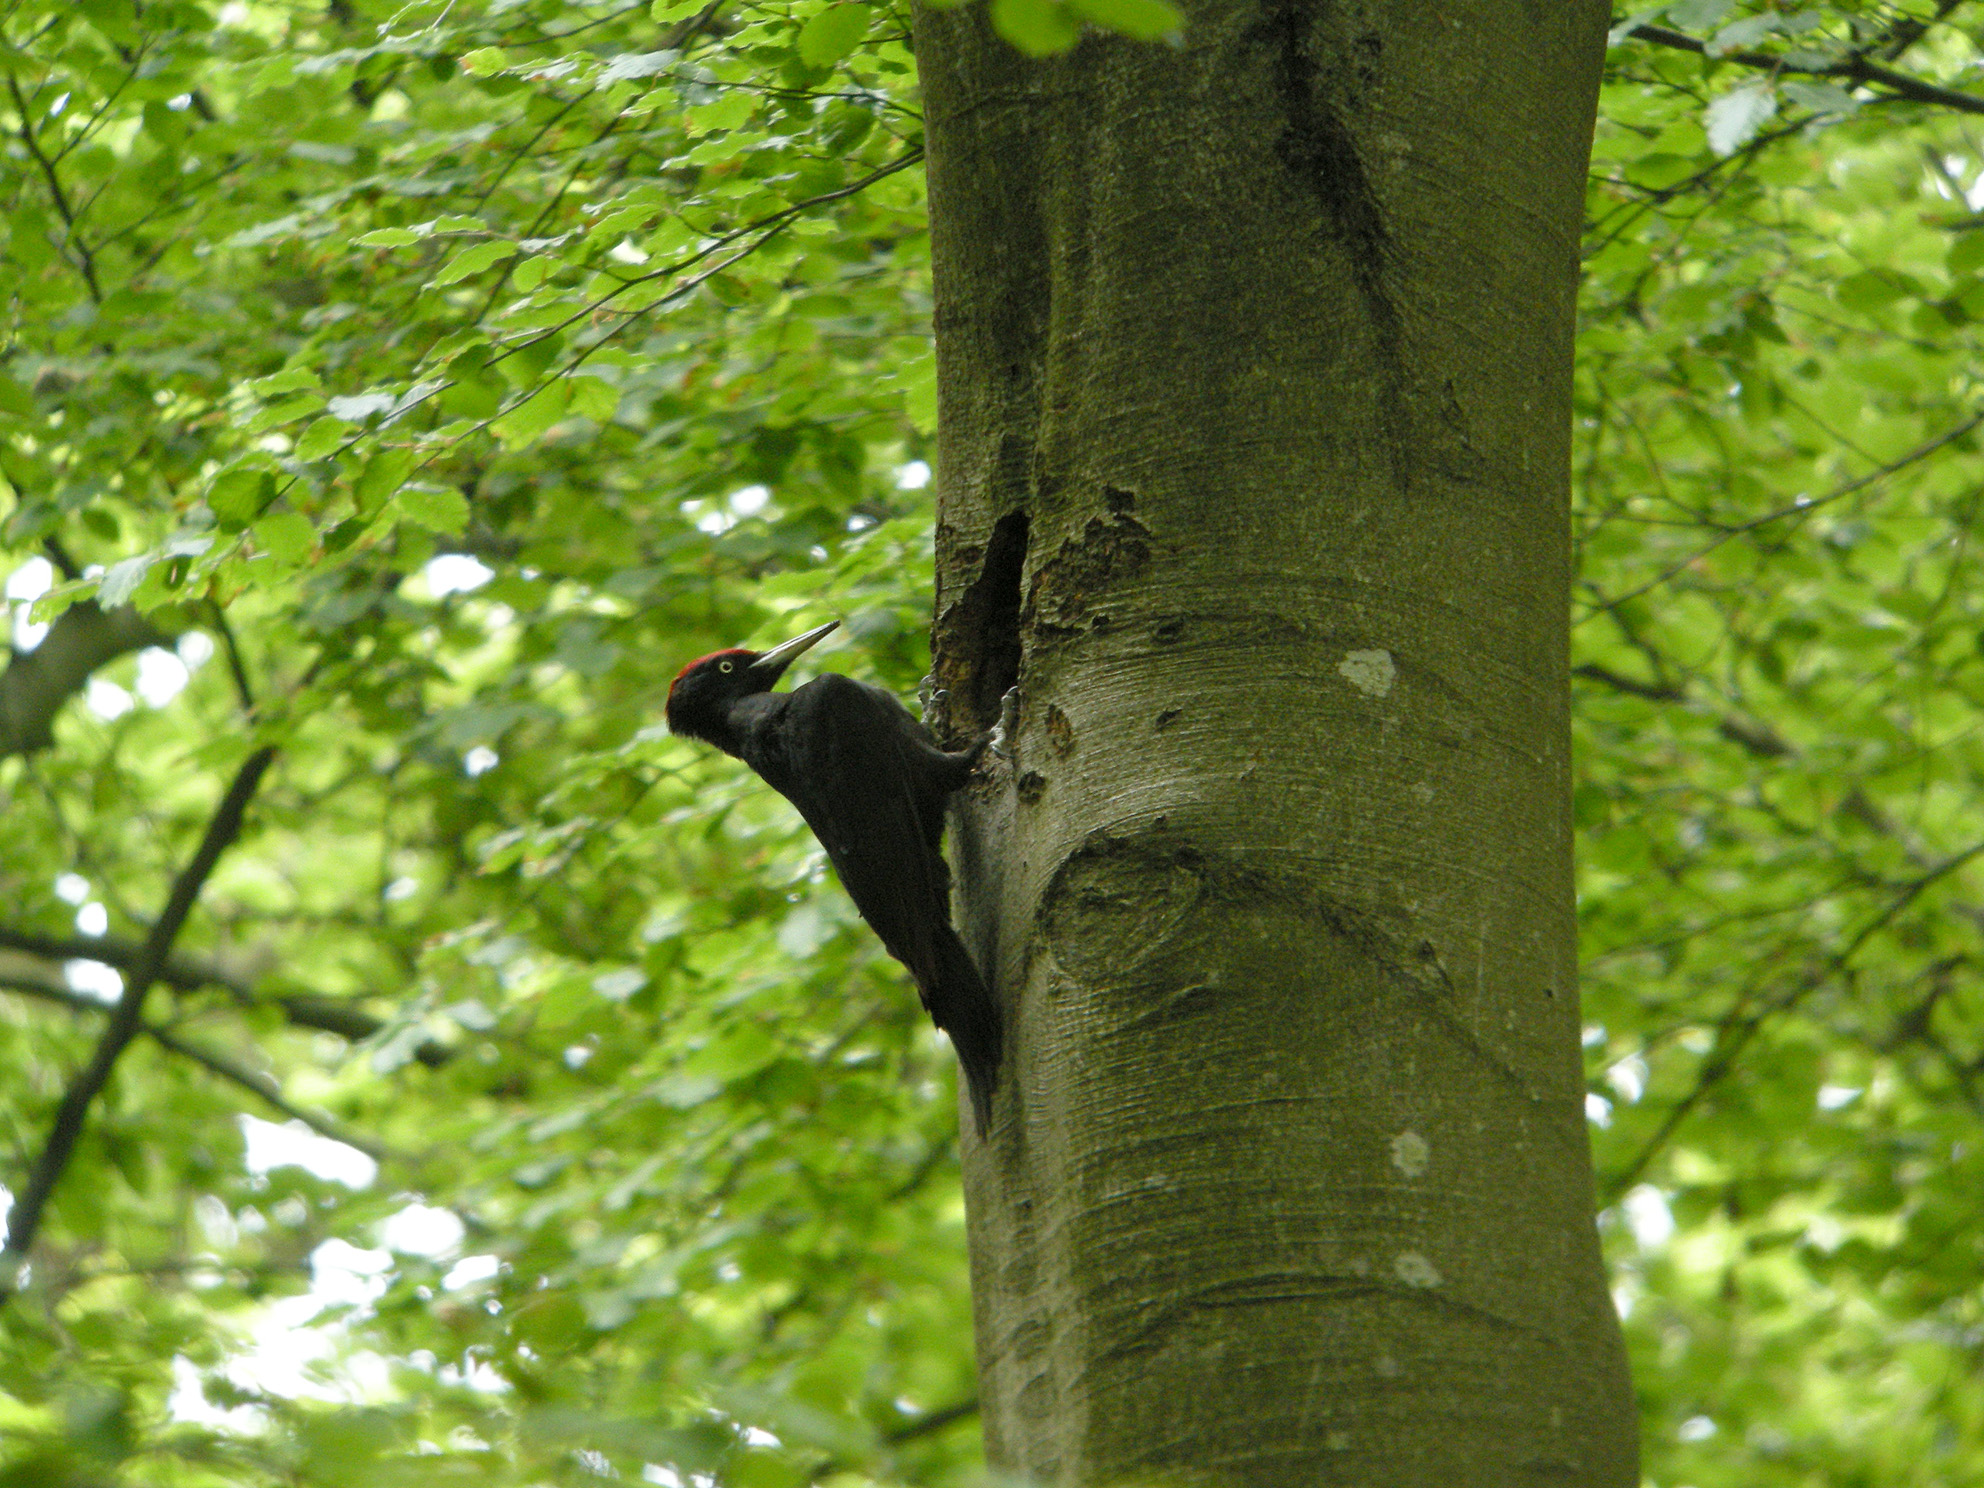 a small black bird is climbing up the tree